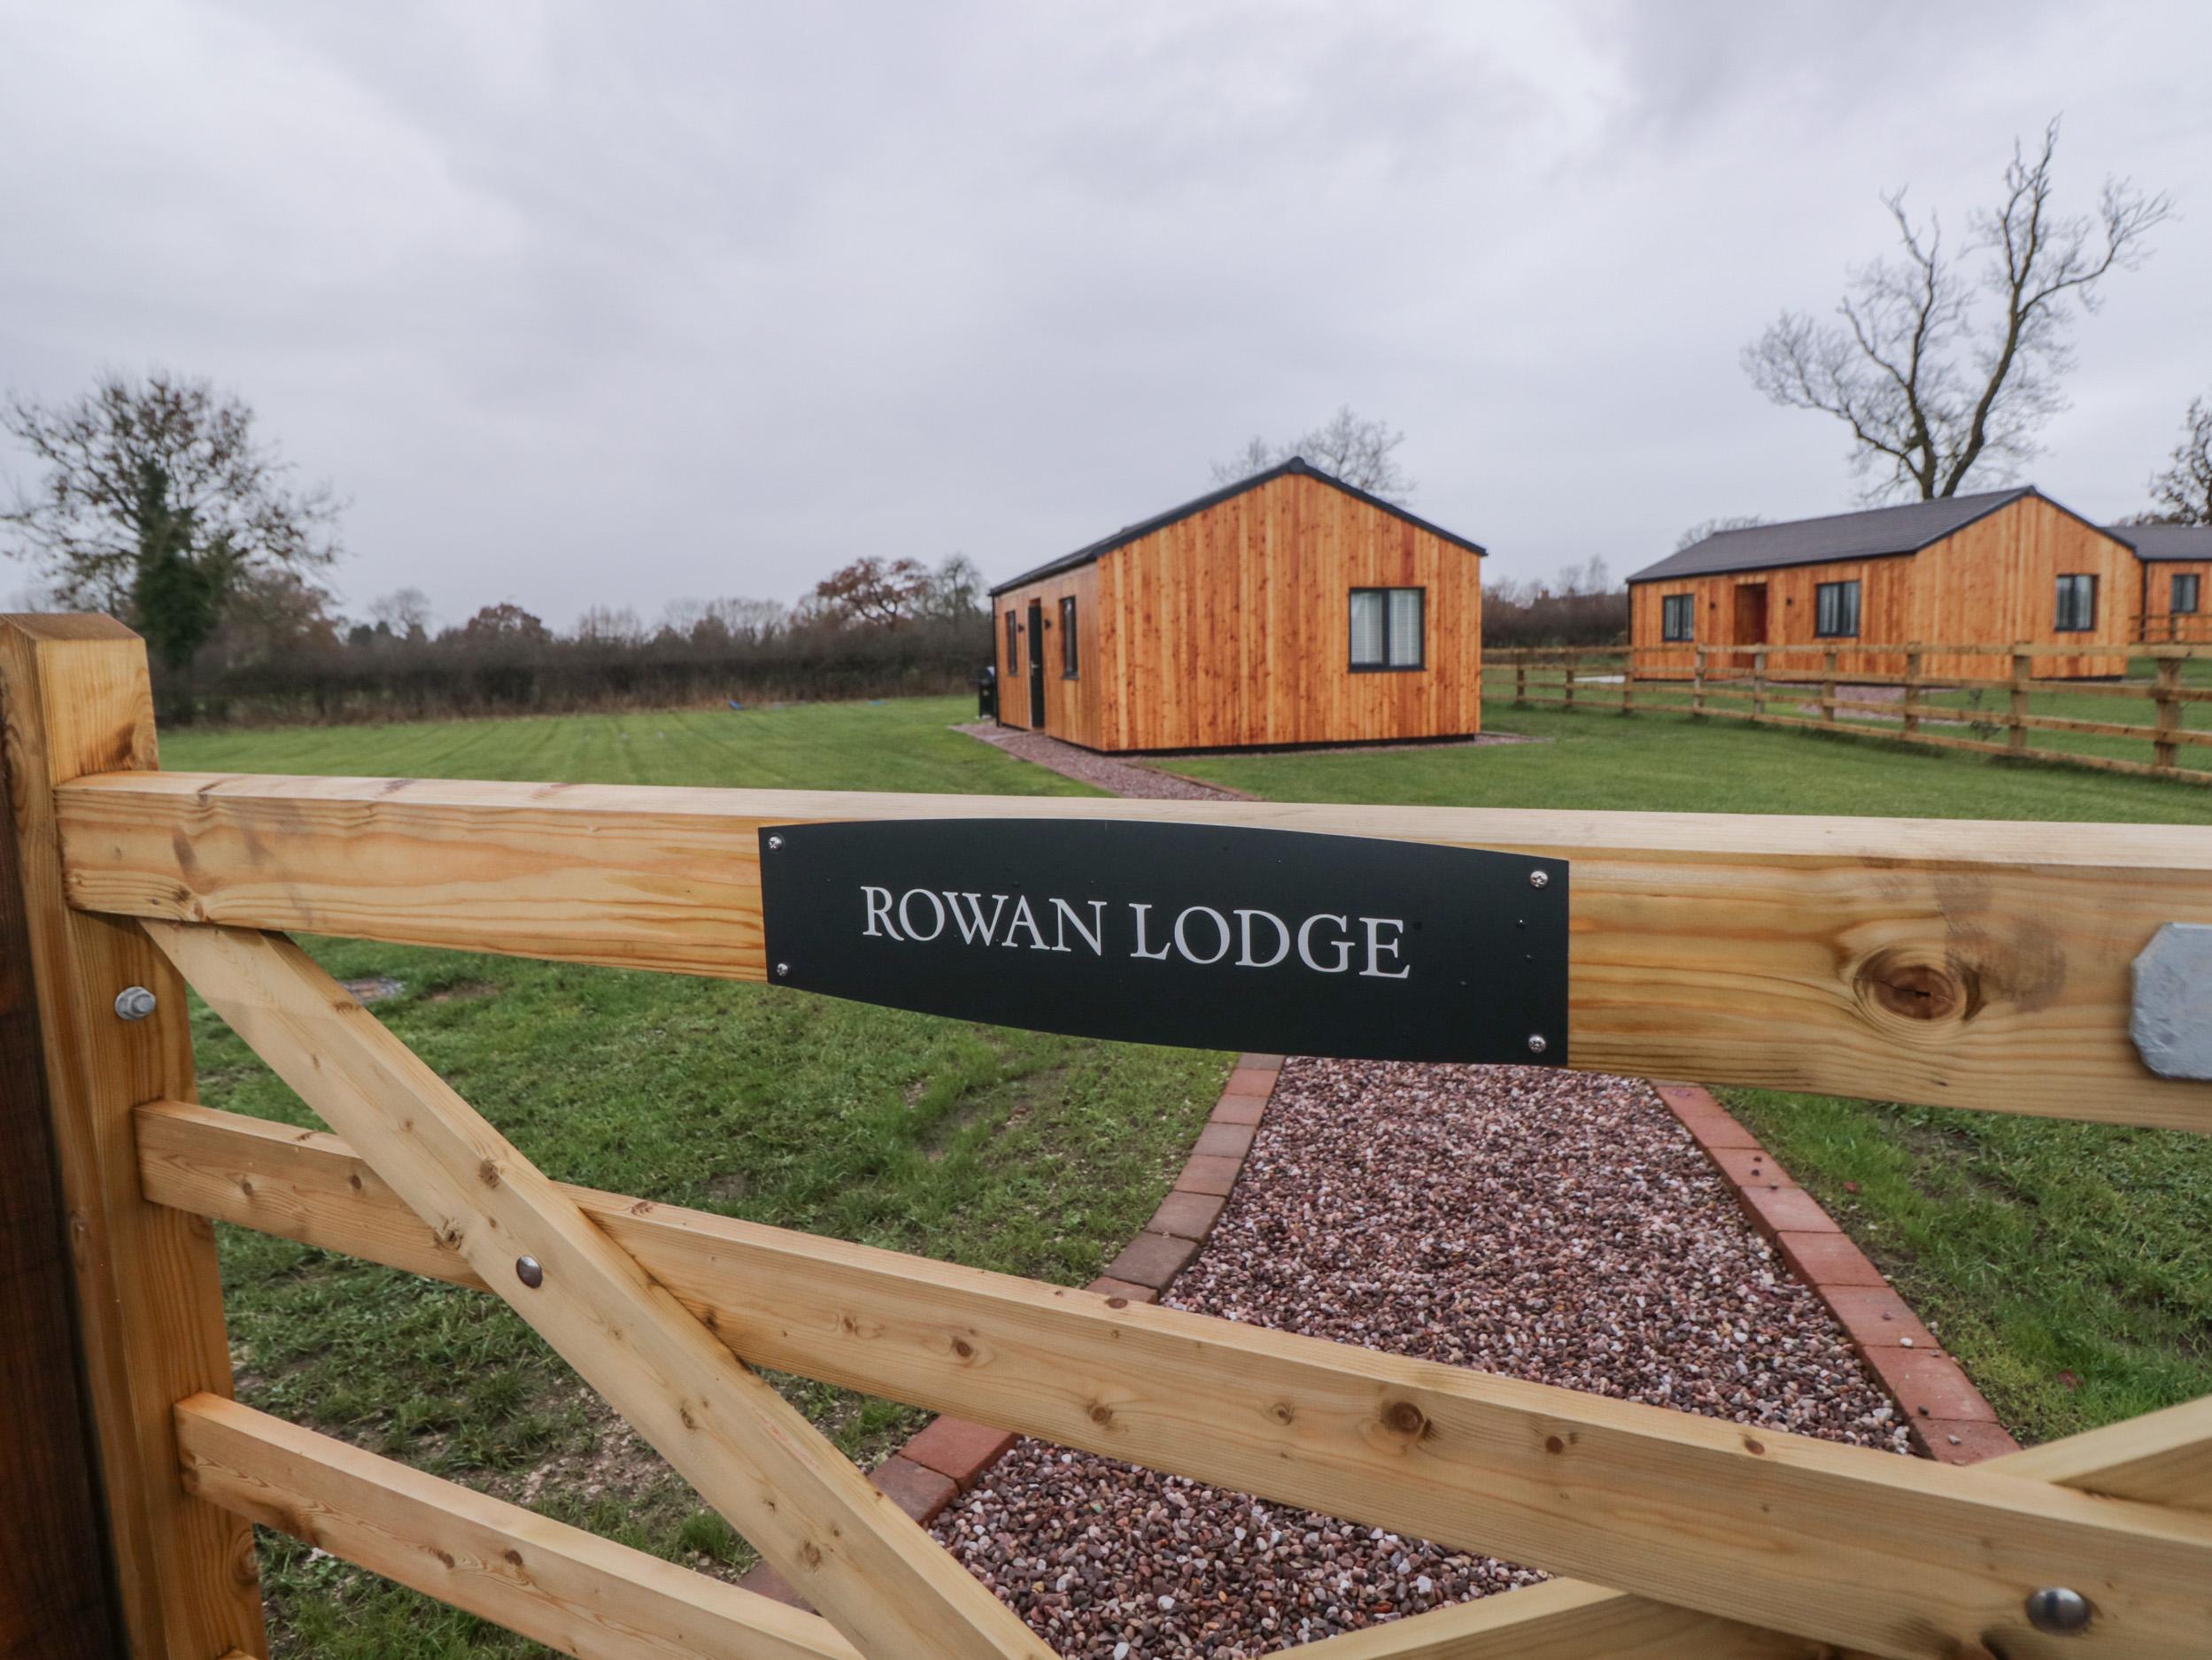 Rowan Lodge